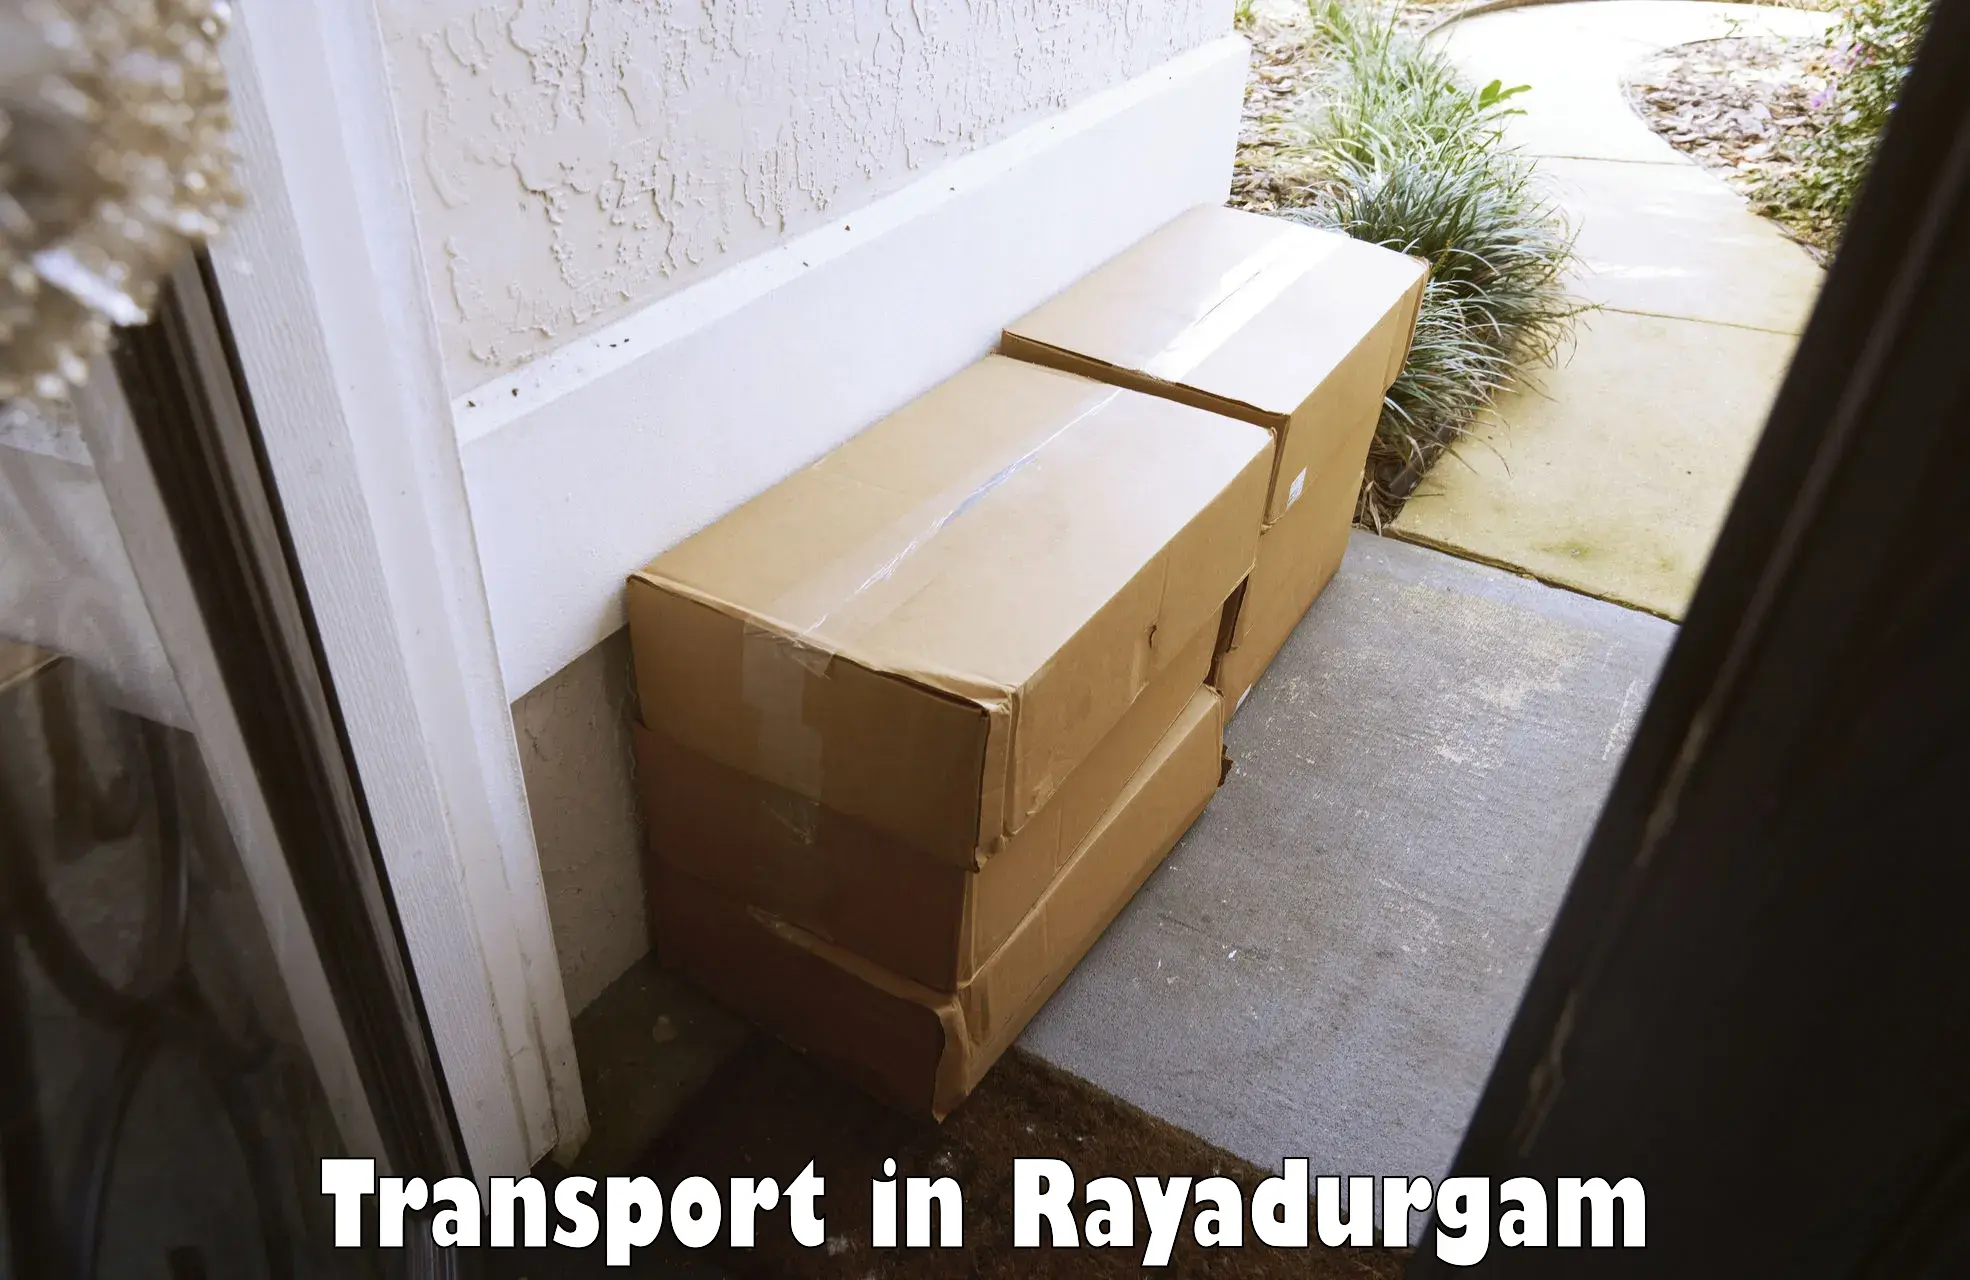 Parcel transport services in Rayadurgam